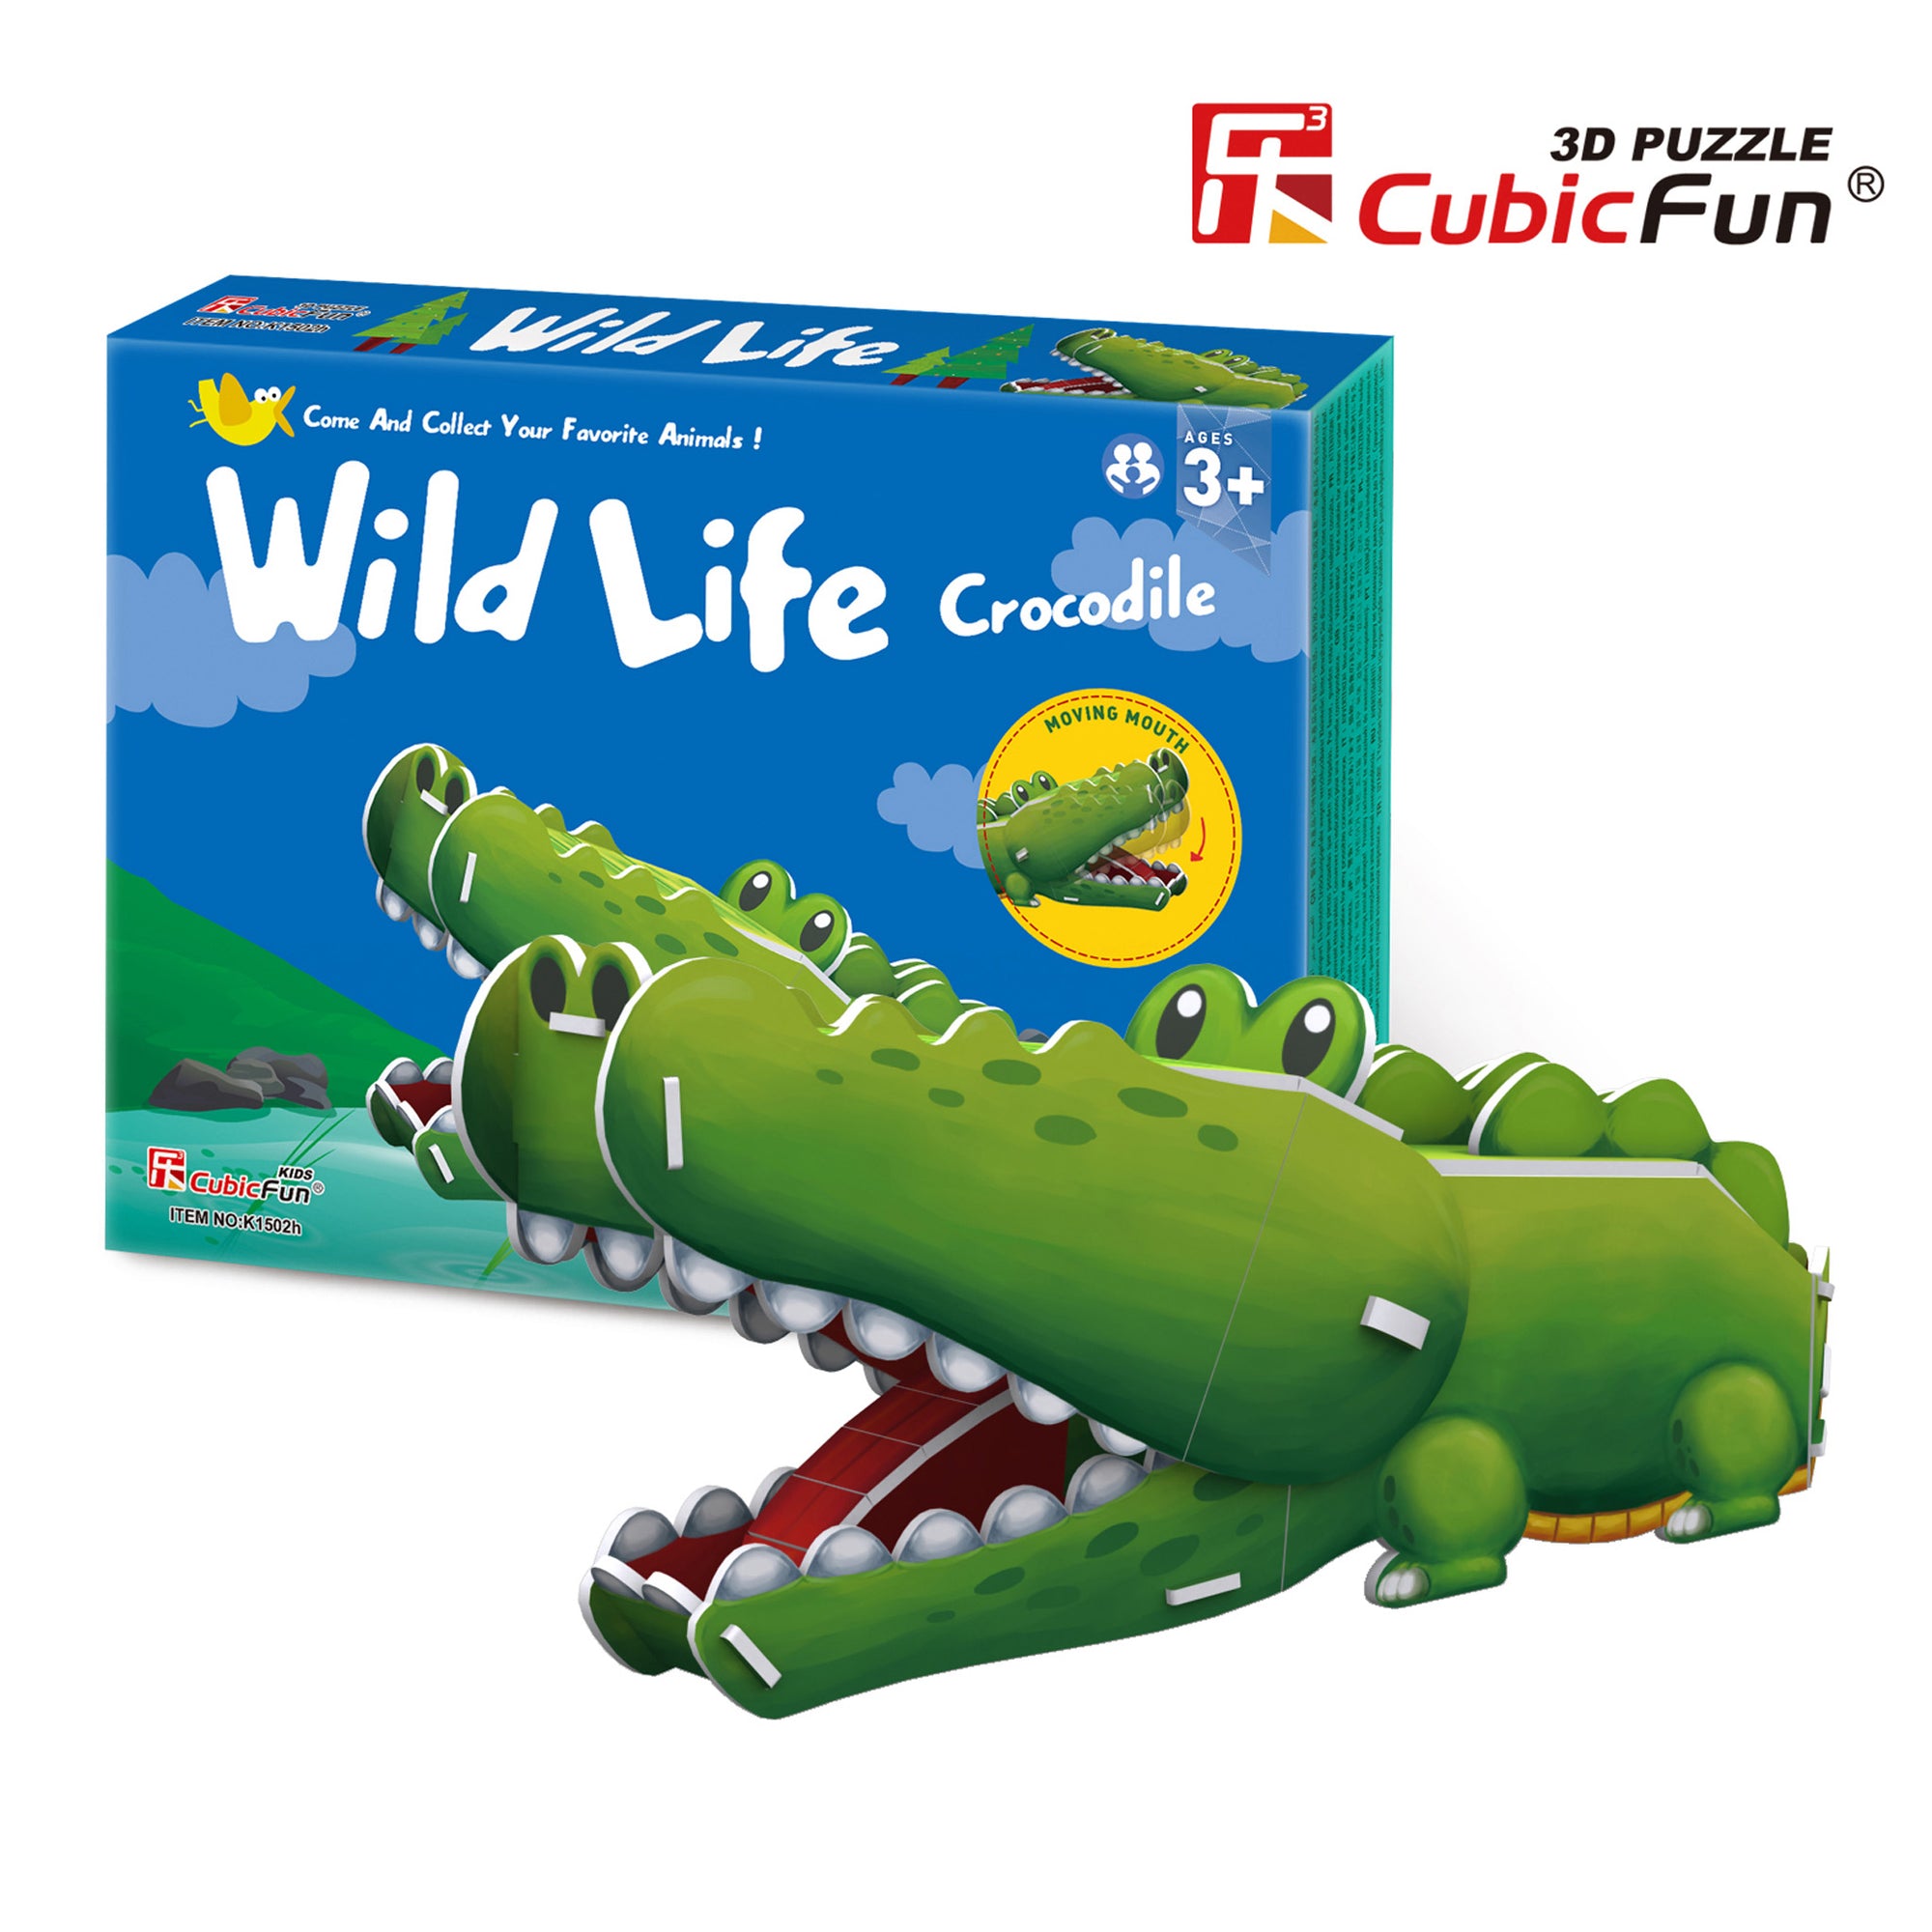 Wild Life Series - Crocodile, 3D Puzzle